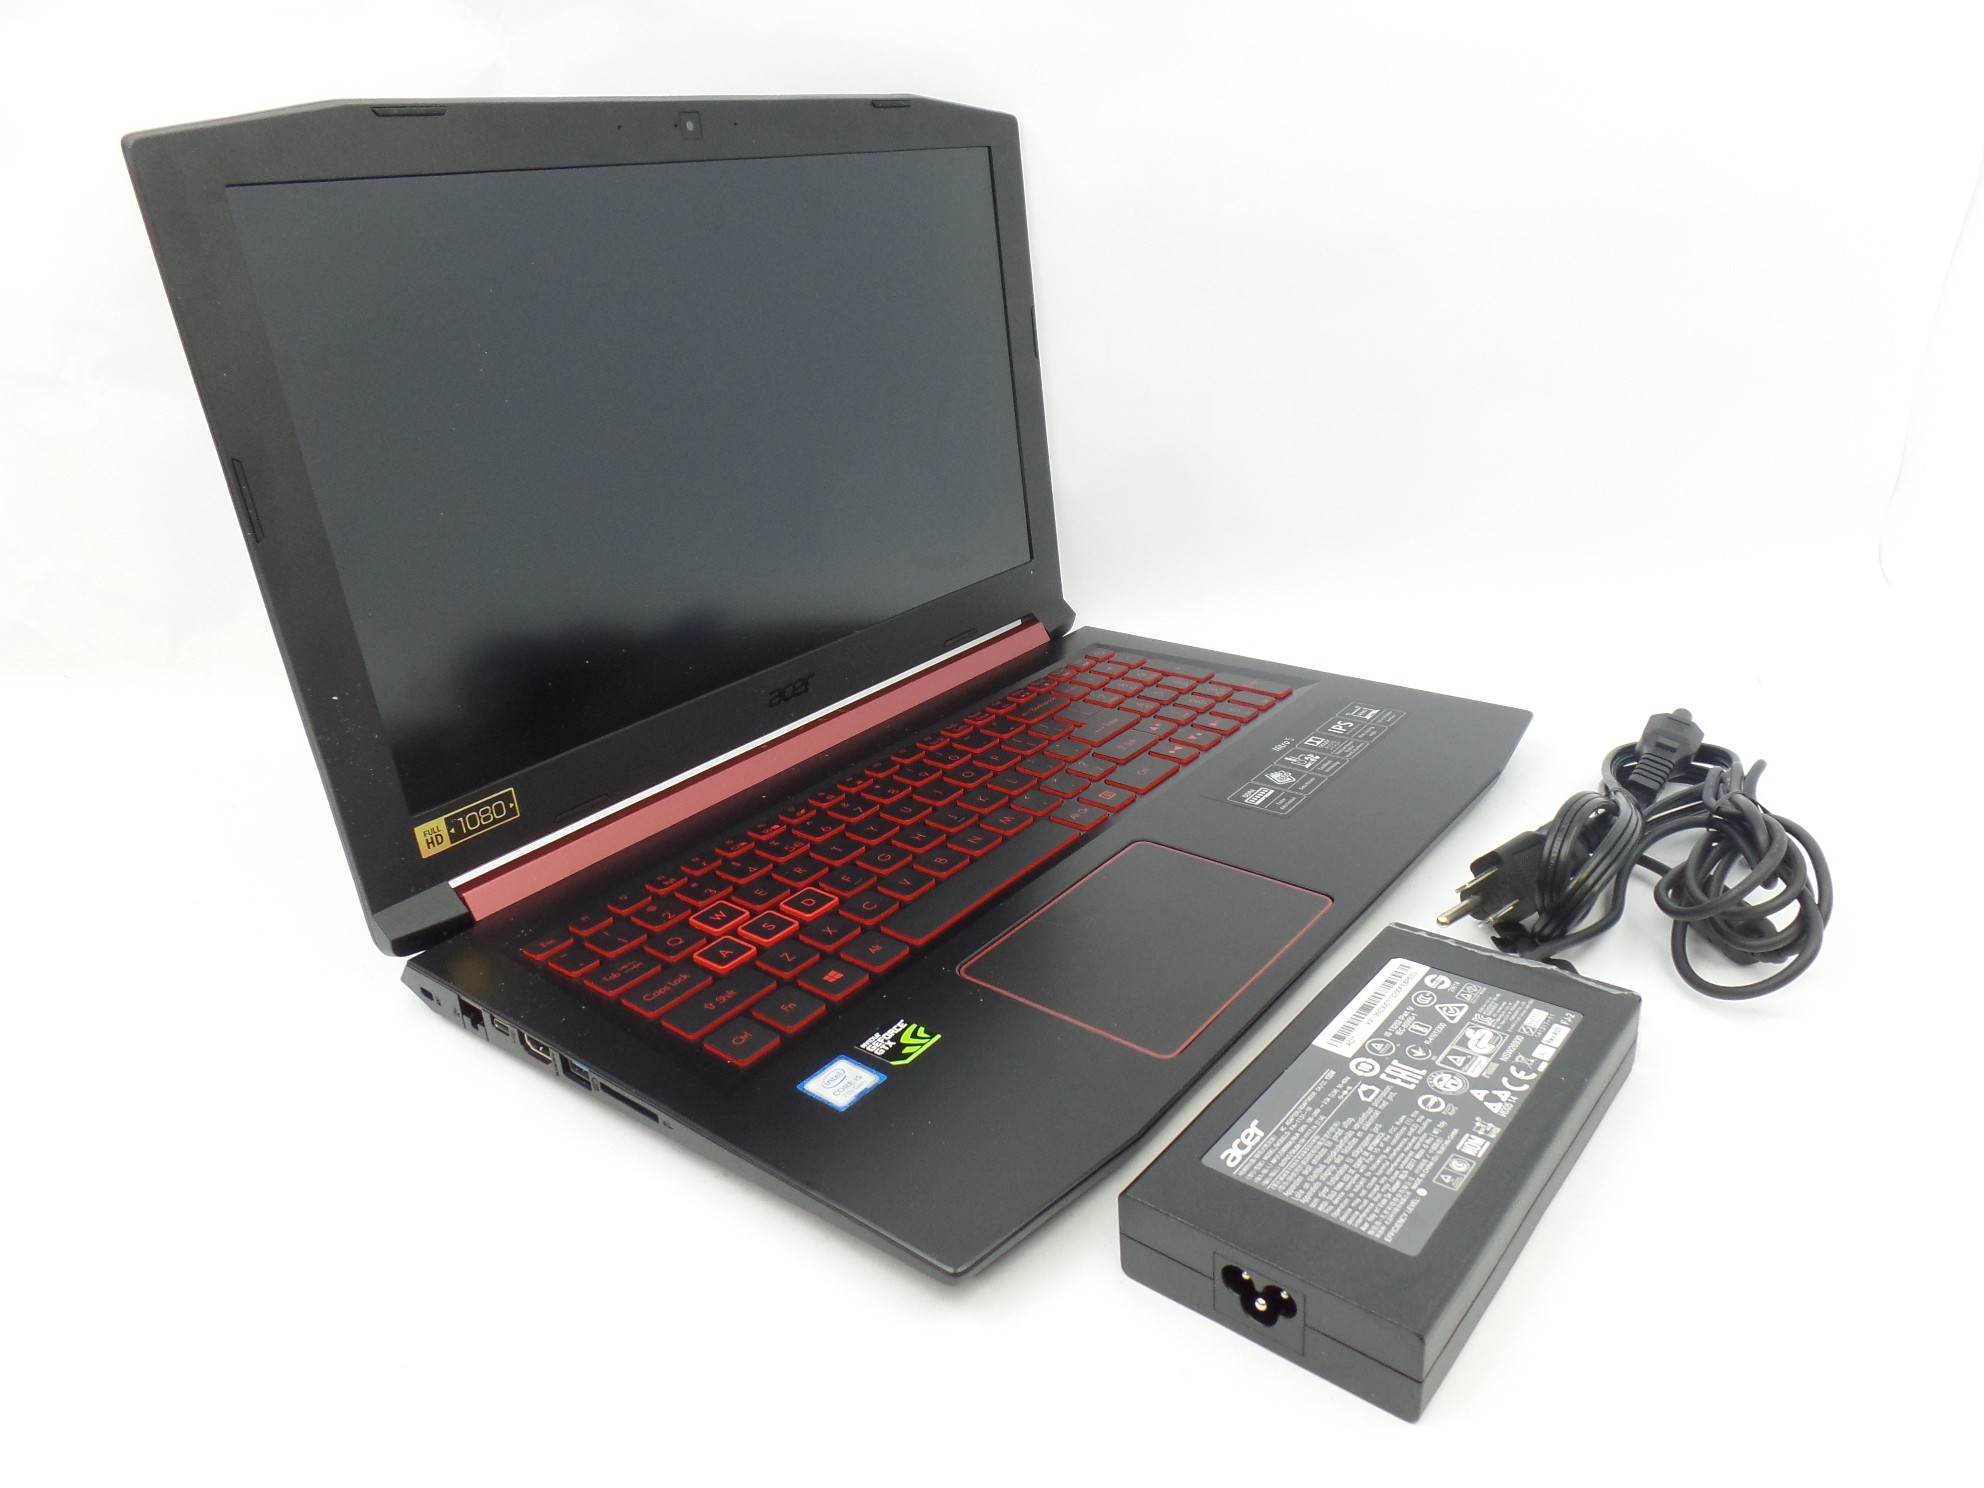 Acer Nitro 5 AN515-51-55WL 15.6" FHD i5-7300HQ 2.5GHz 8GB 256GB GTX1050Ti Laptop